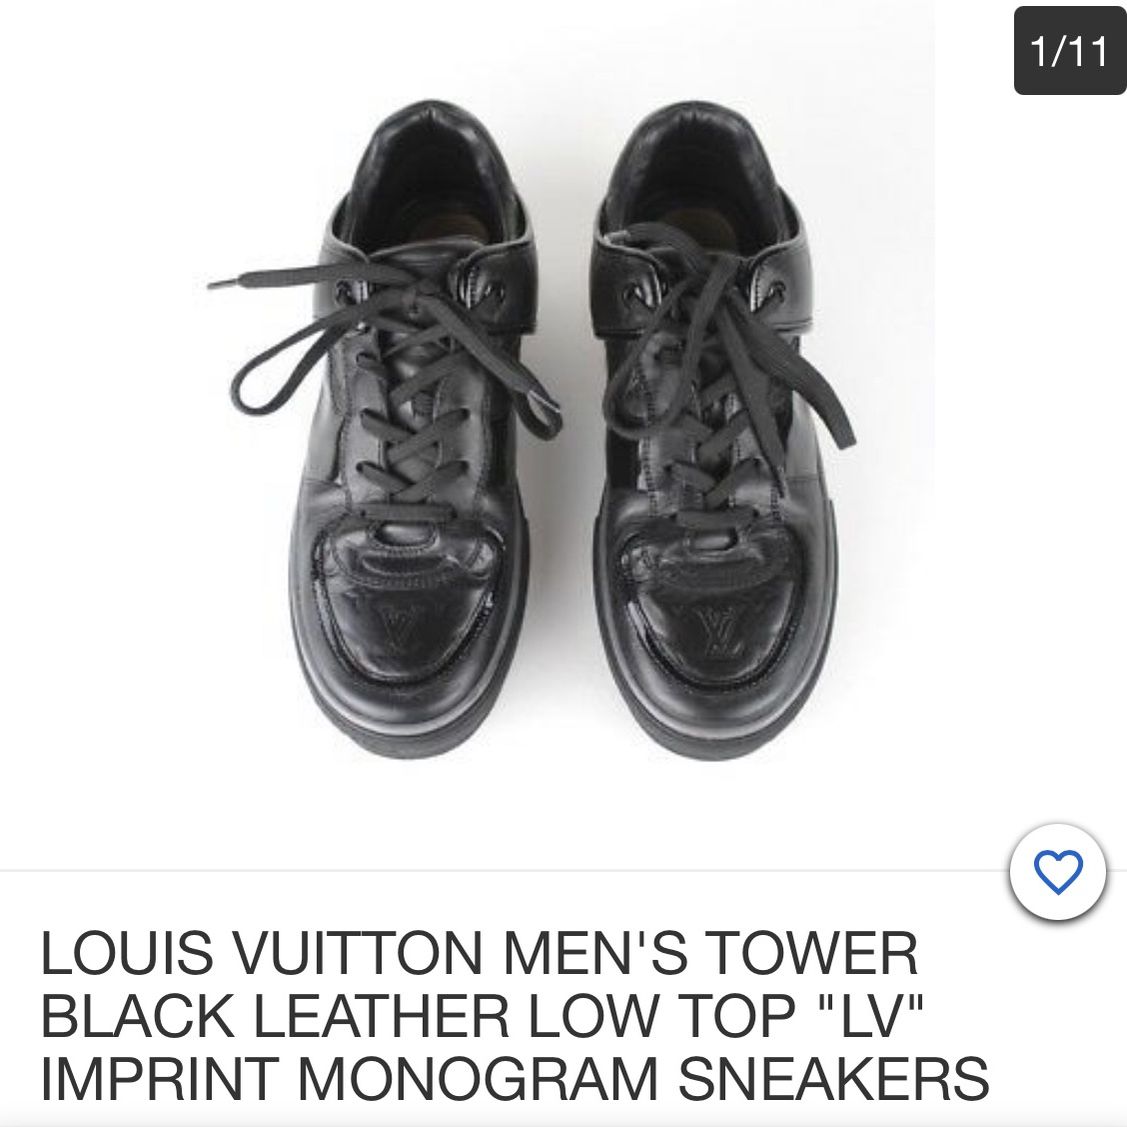 LOUIS VUITTON MEN'S TOWER BLACK LEATHER LOW TOP LV IMPRINT MONOGRAM  SNEAKERS